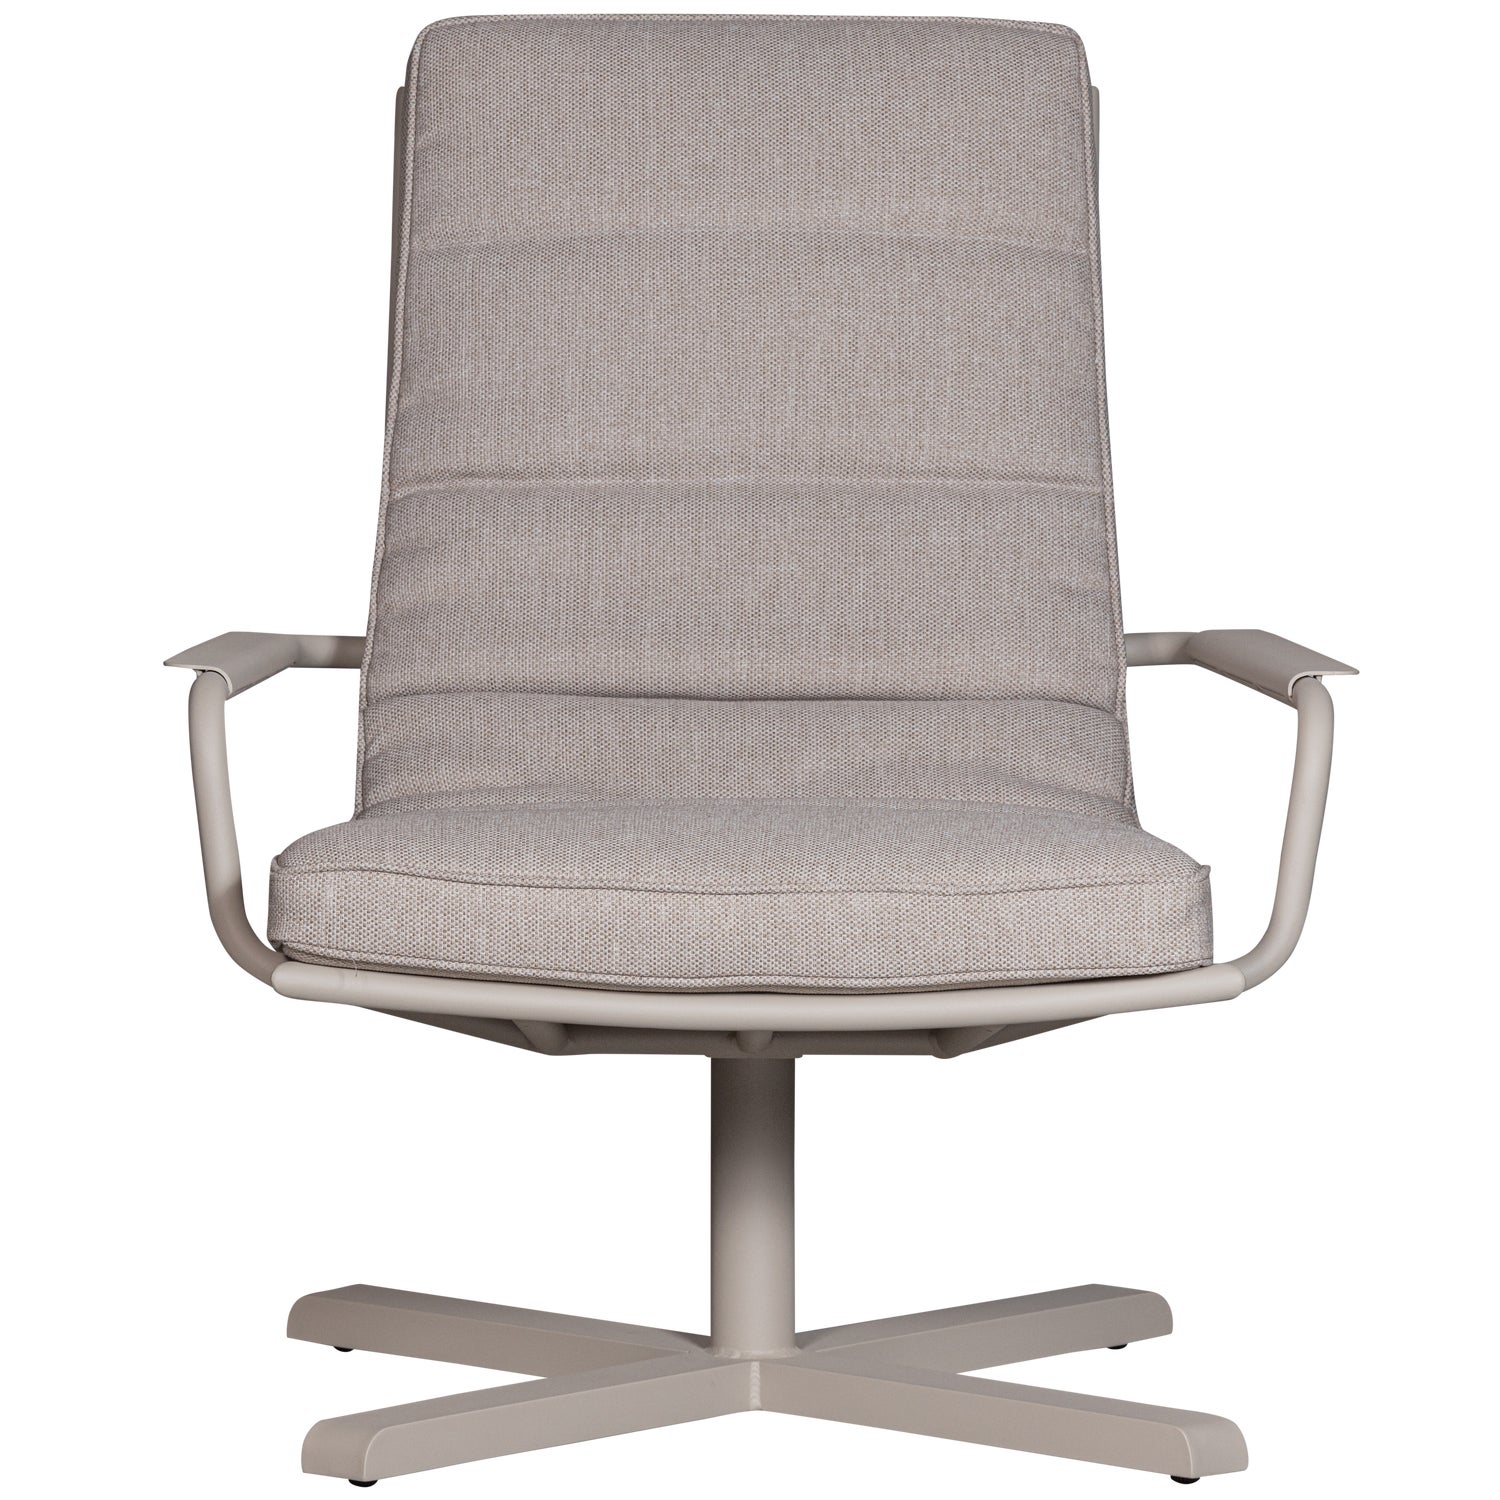 500009-Z-01_VS_EXT_Coosa_fauteuil_aluminium_zand.png?auto=webp&format=png&width=1500&height=1500